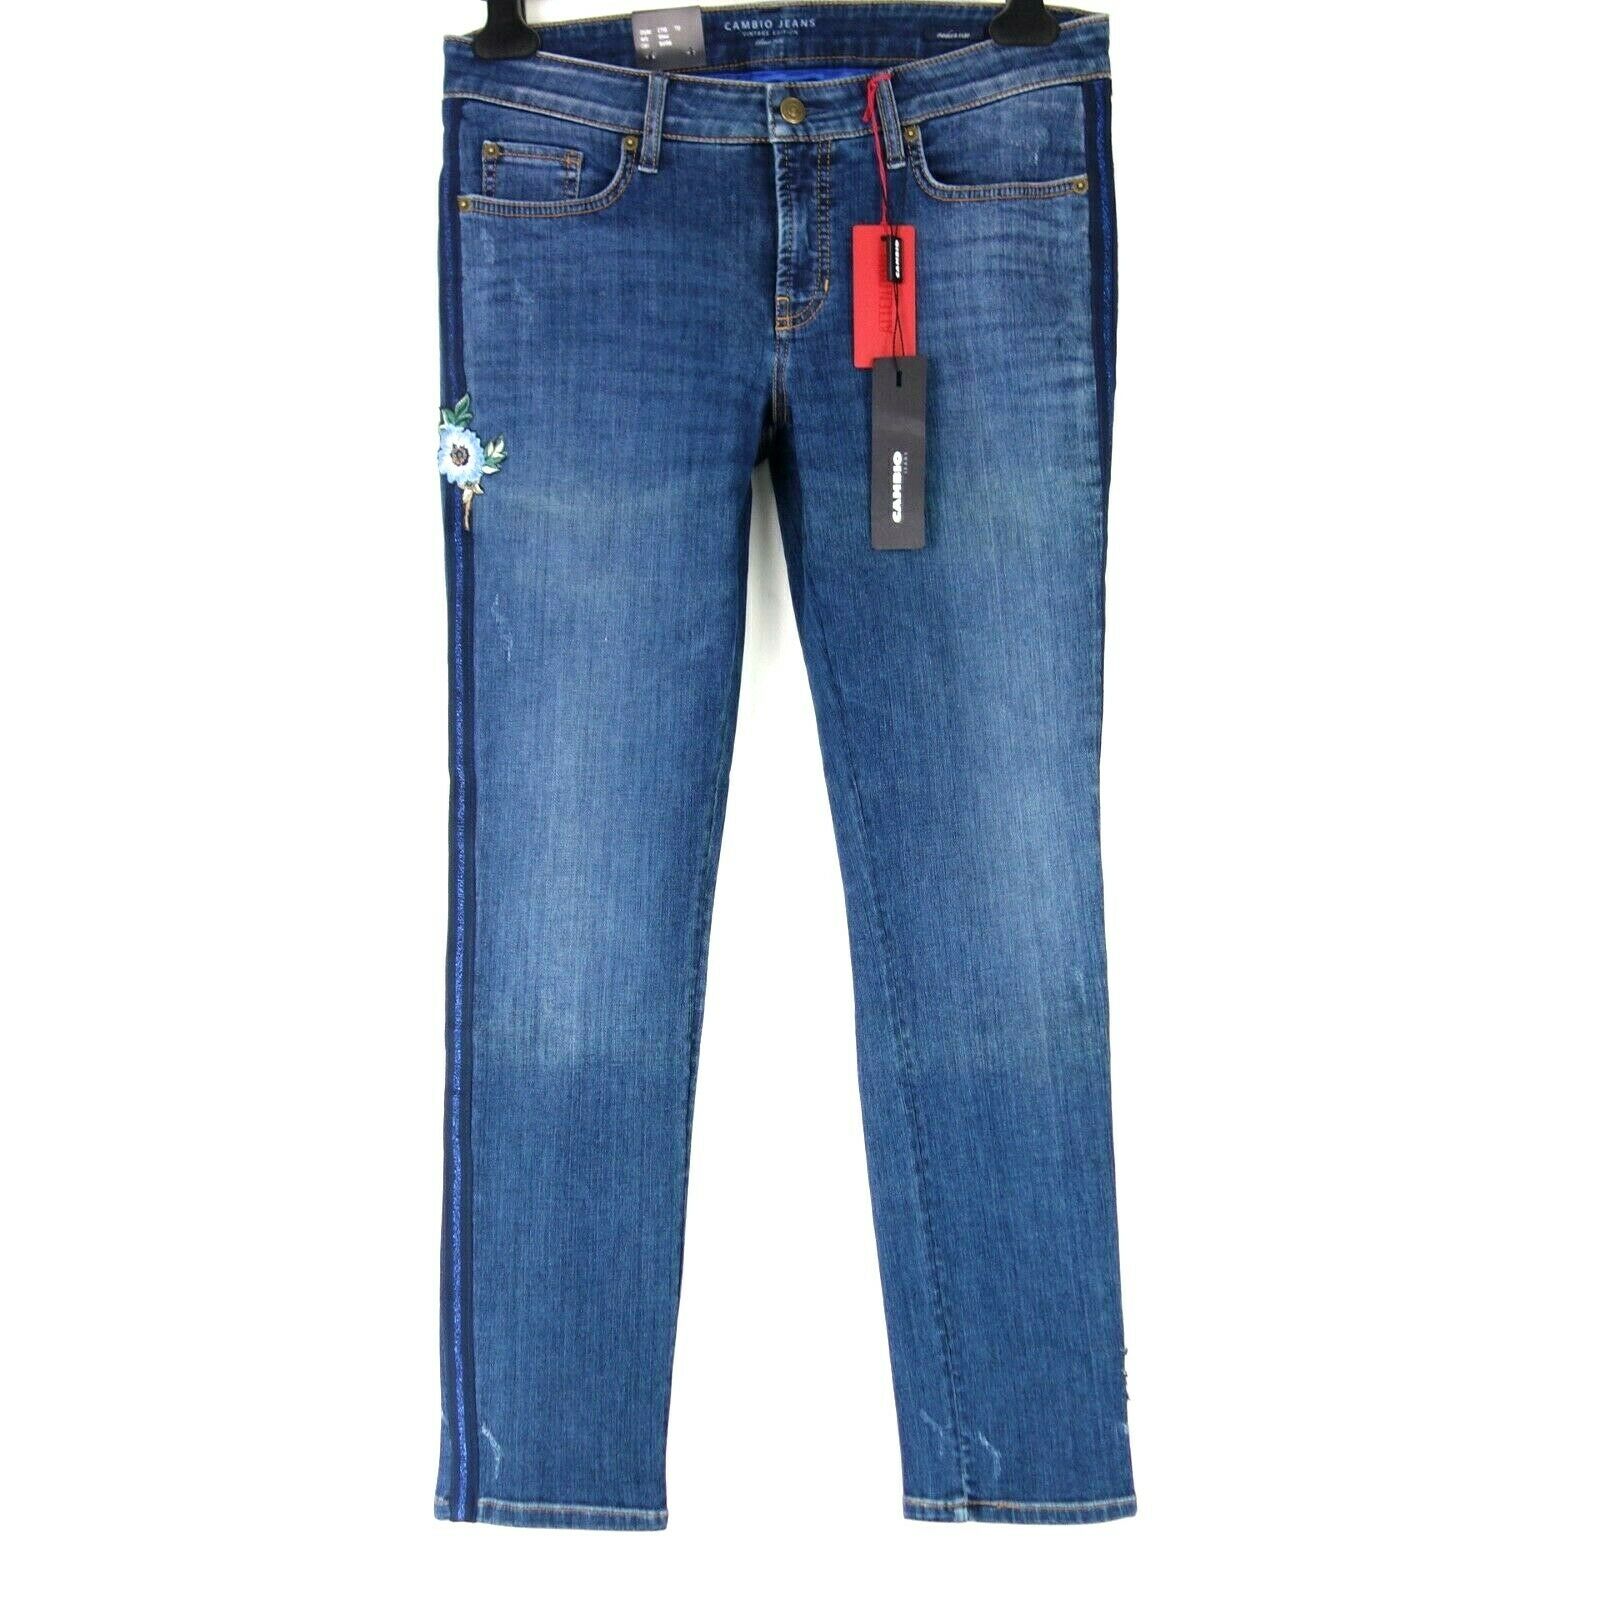 Cambio Damen Jeans Hose Modell Liu Dunkelblau Zierstreifen Bestick Neu - 34